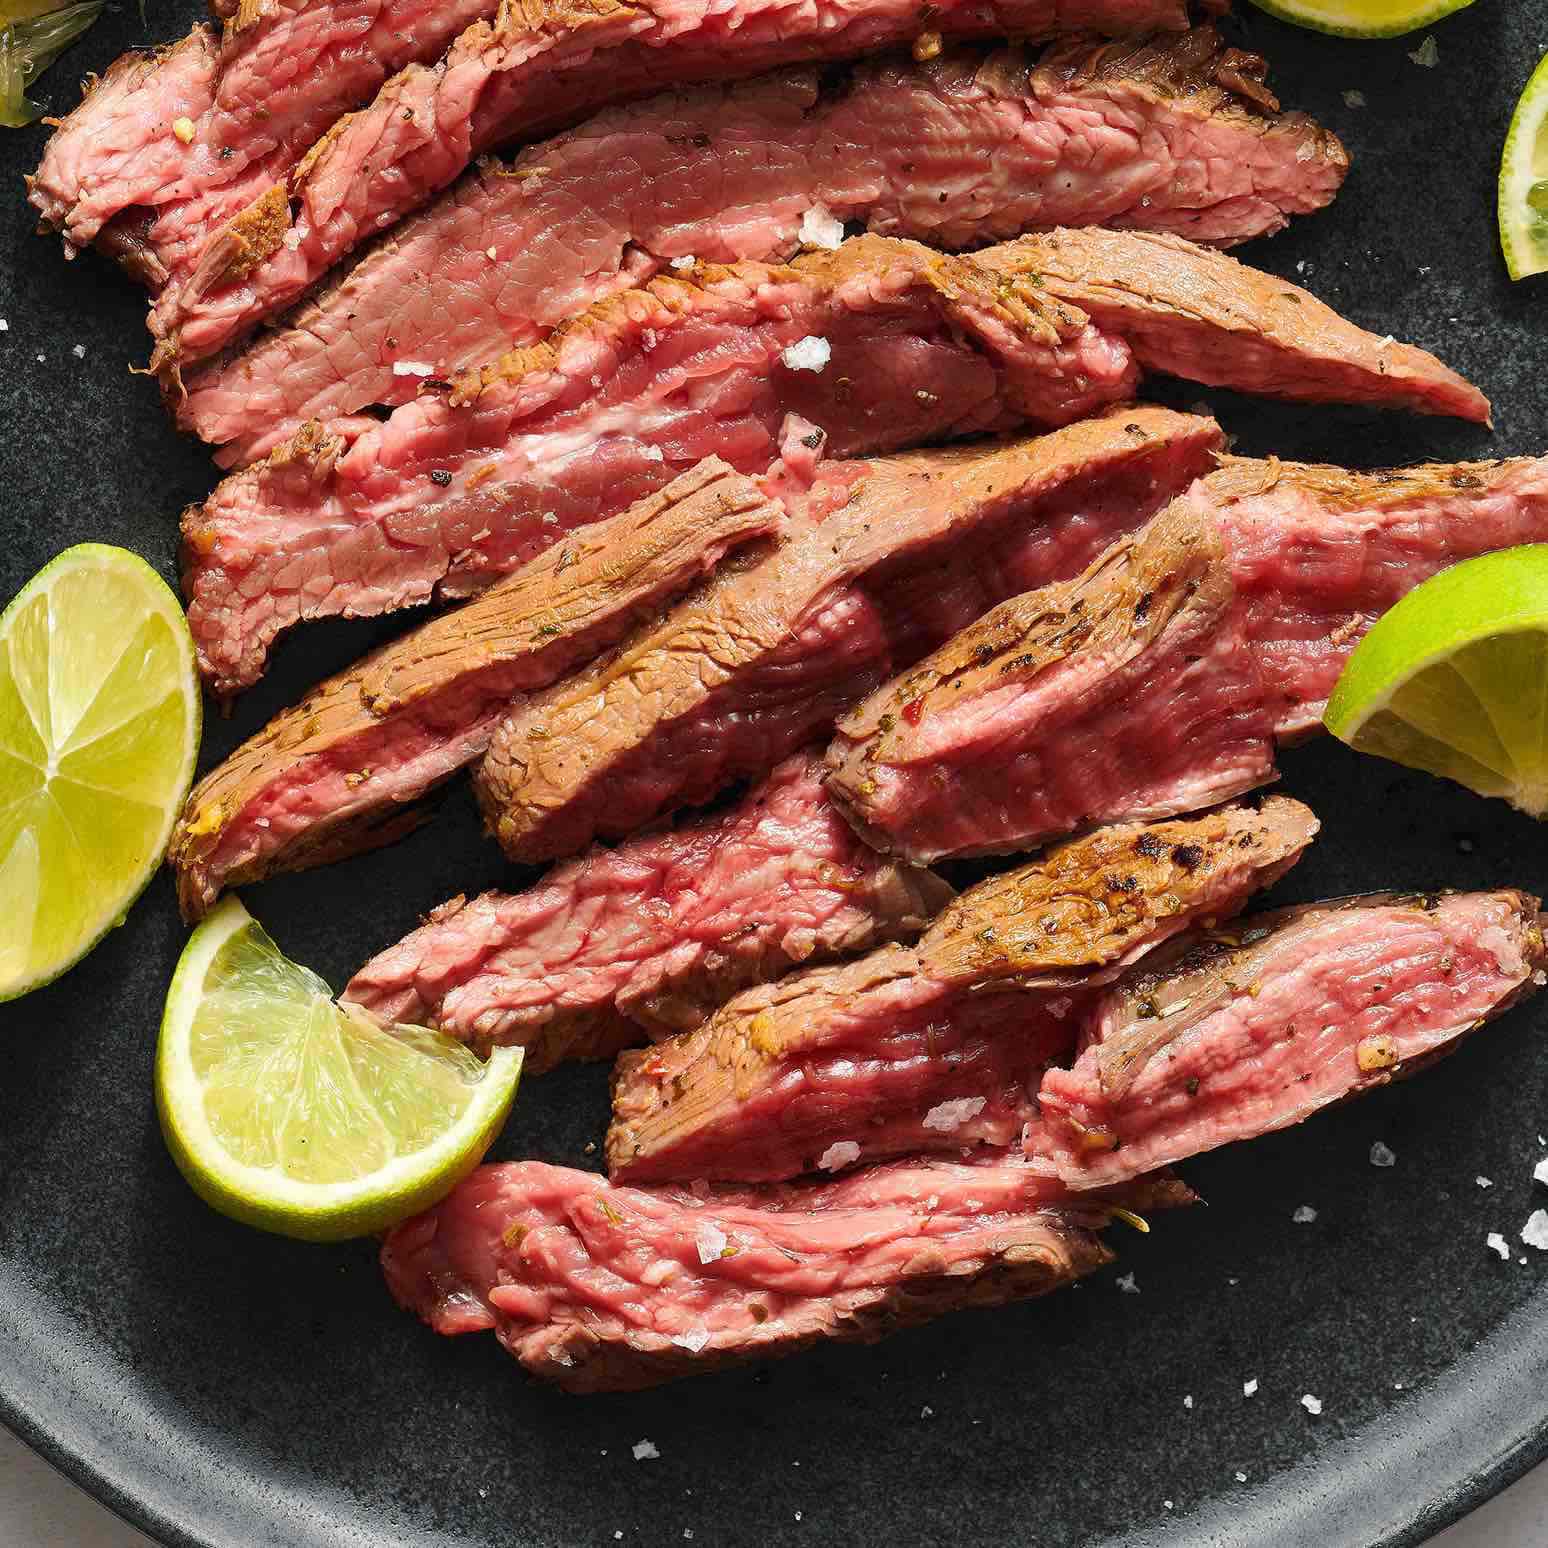 Perfect Flank Steak Recipe - The Big Man's World ®